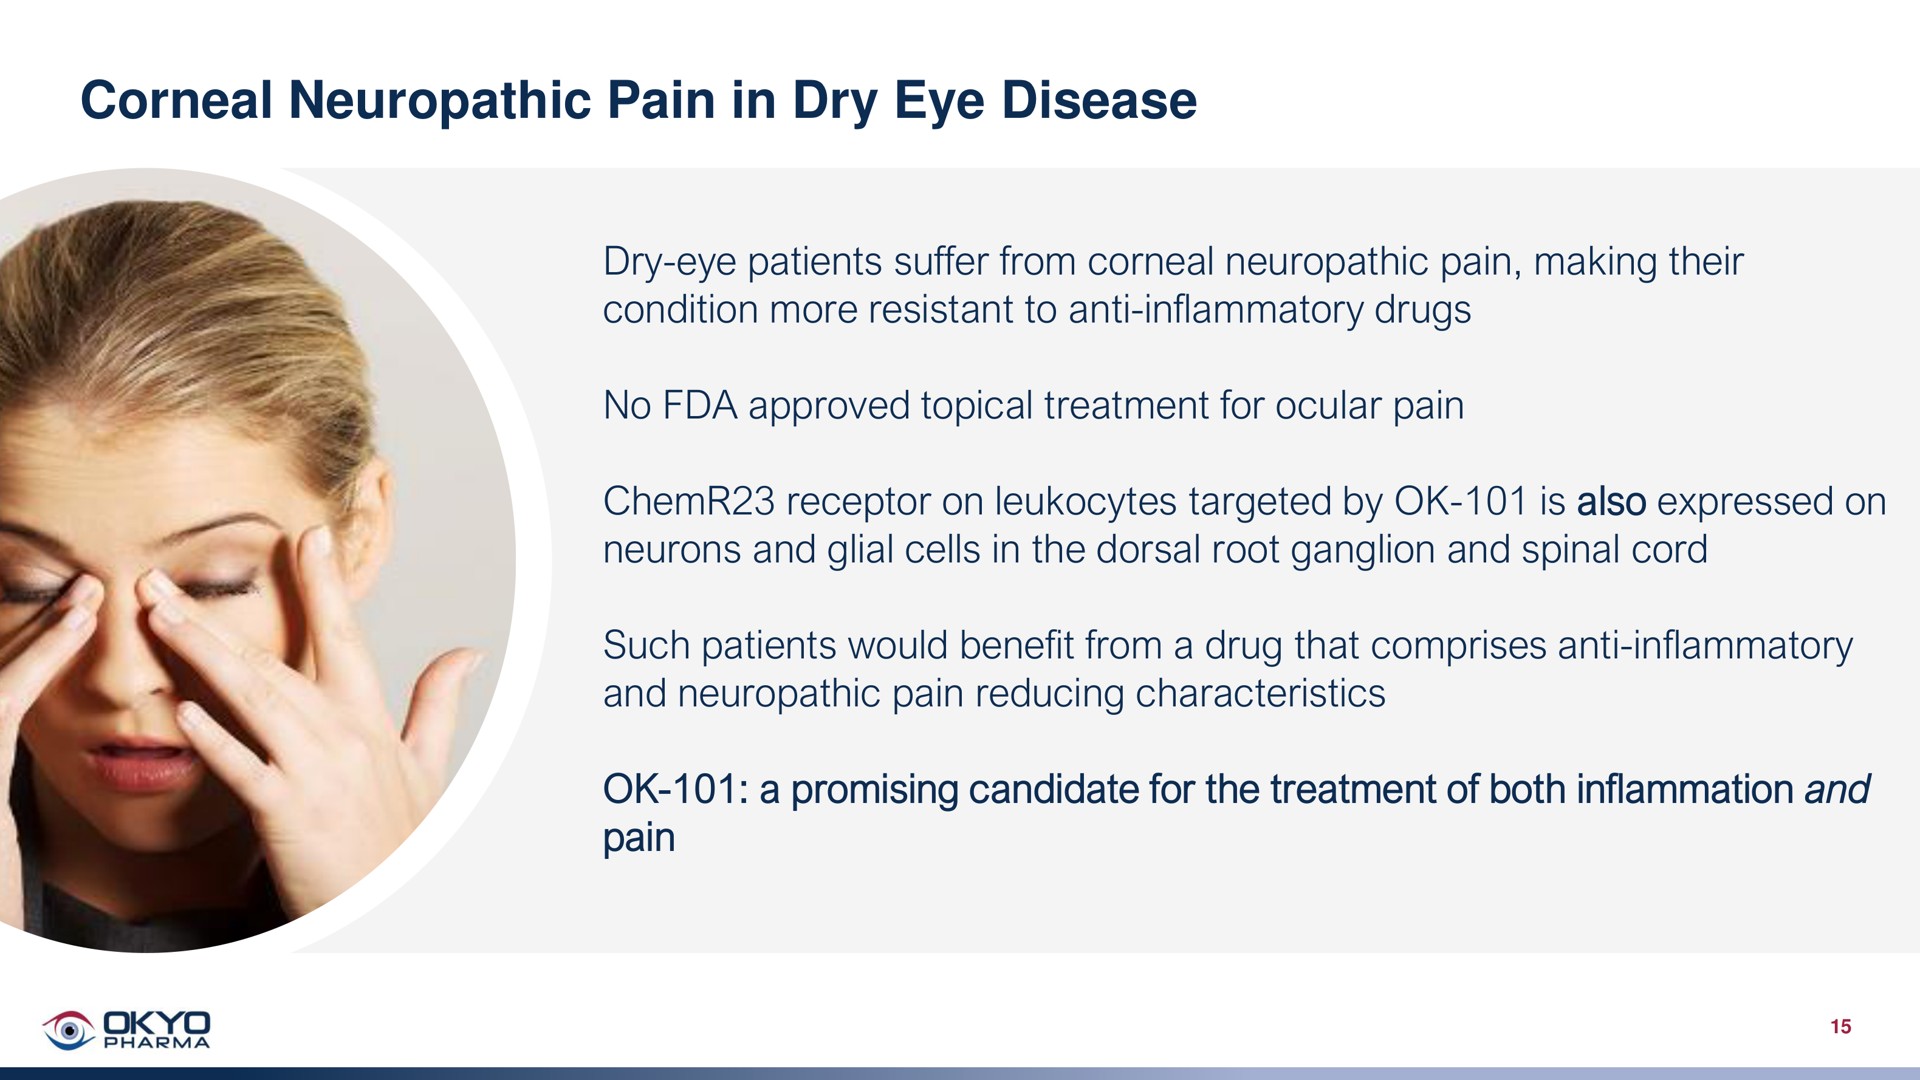 corneal neuropathic pain in dry eye disease | OKYO Pharma